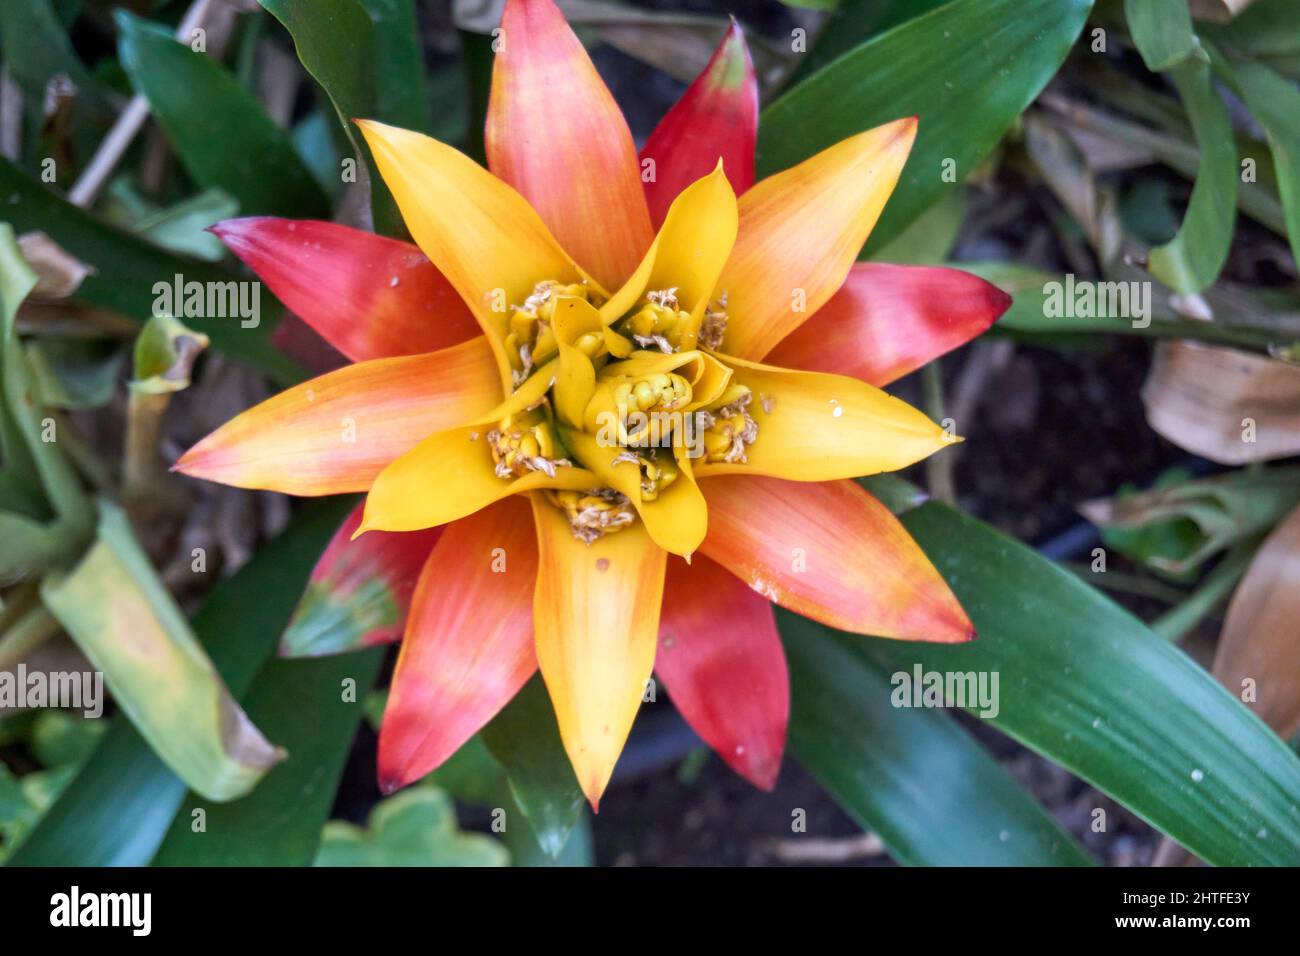 Closeup shot of a guzmania flower Stock Photo